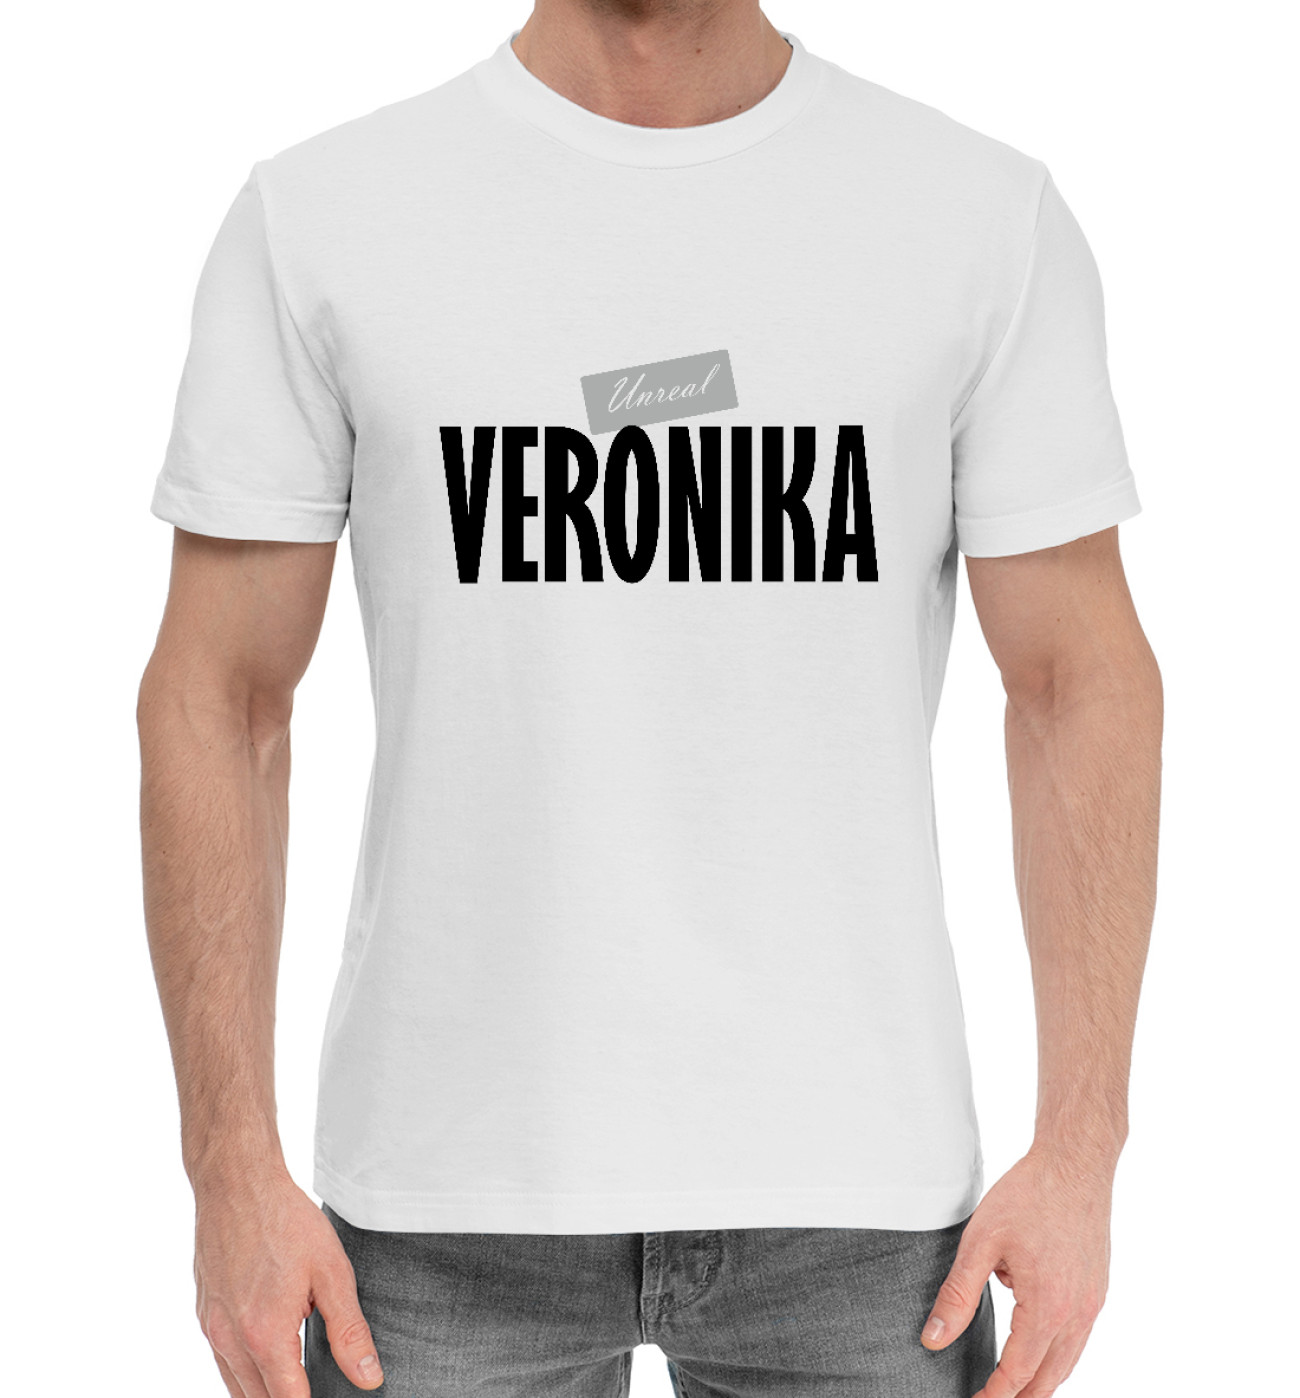 Мужская Хлопковая футболка Вероника, артикул: VER-678242-hfu-2